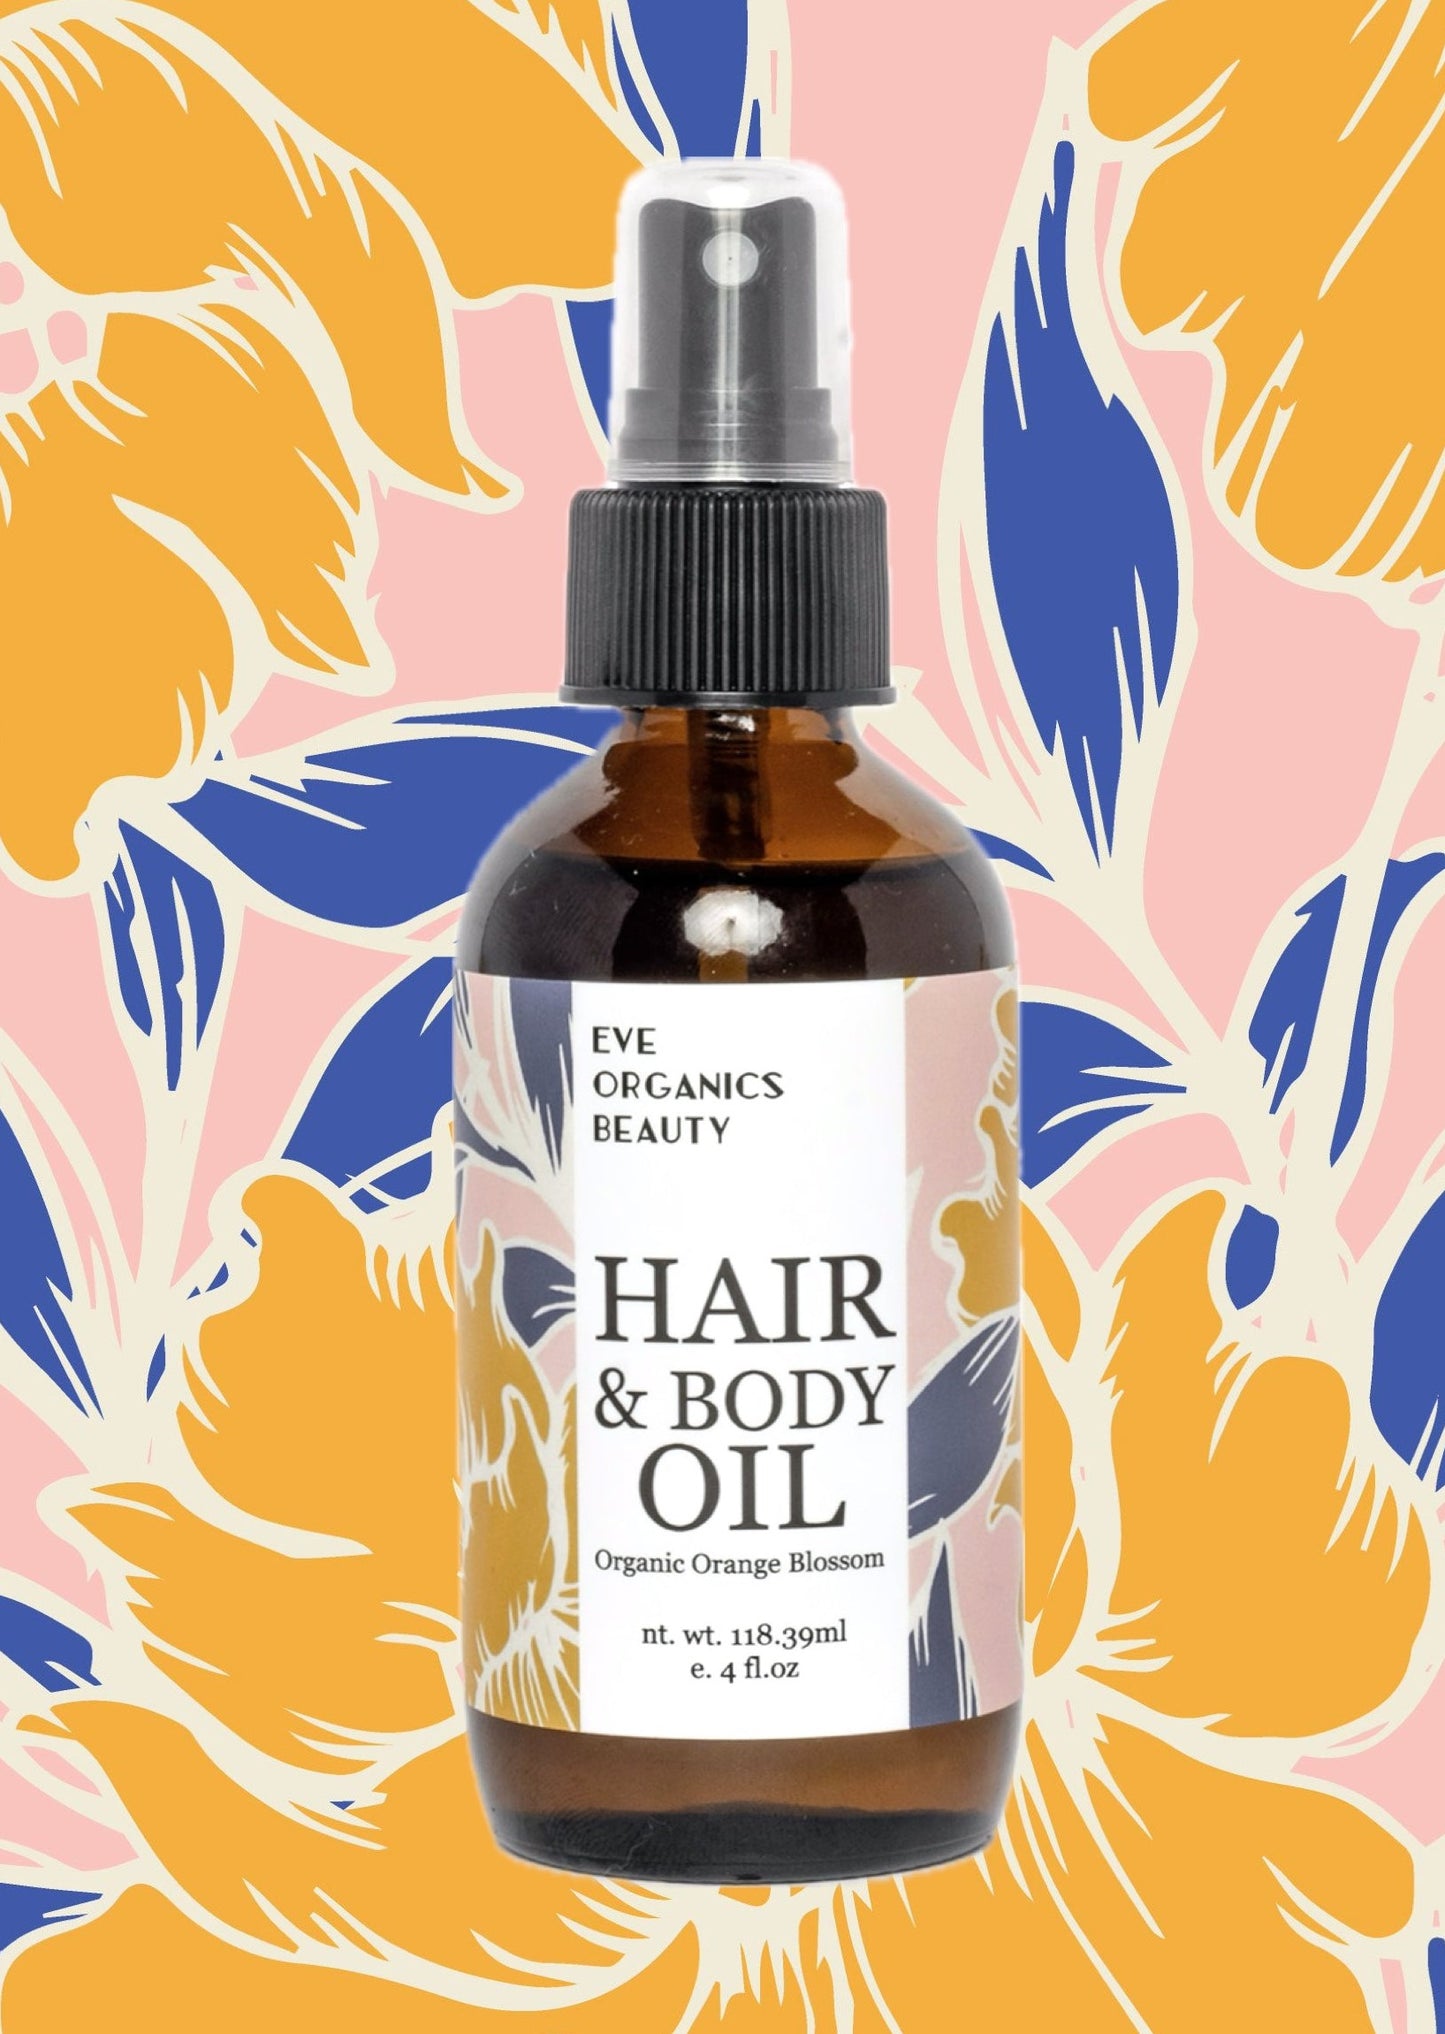 HAIR & BODY OIL Organic Orange Blossom - Eve Organics Beauty